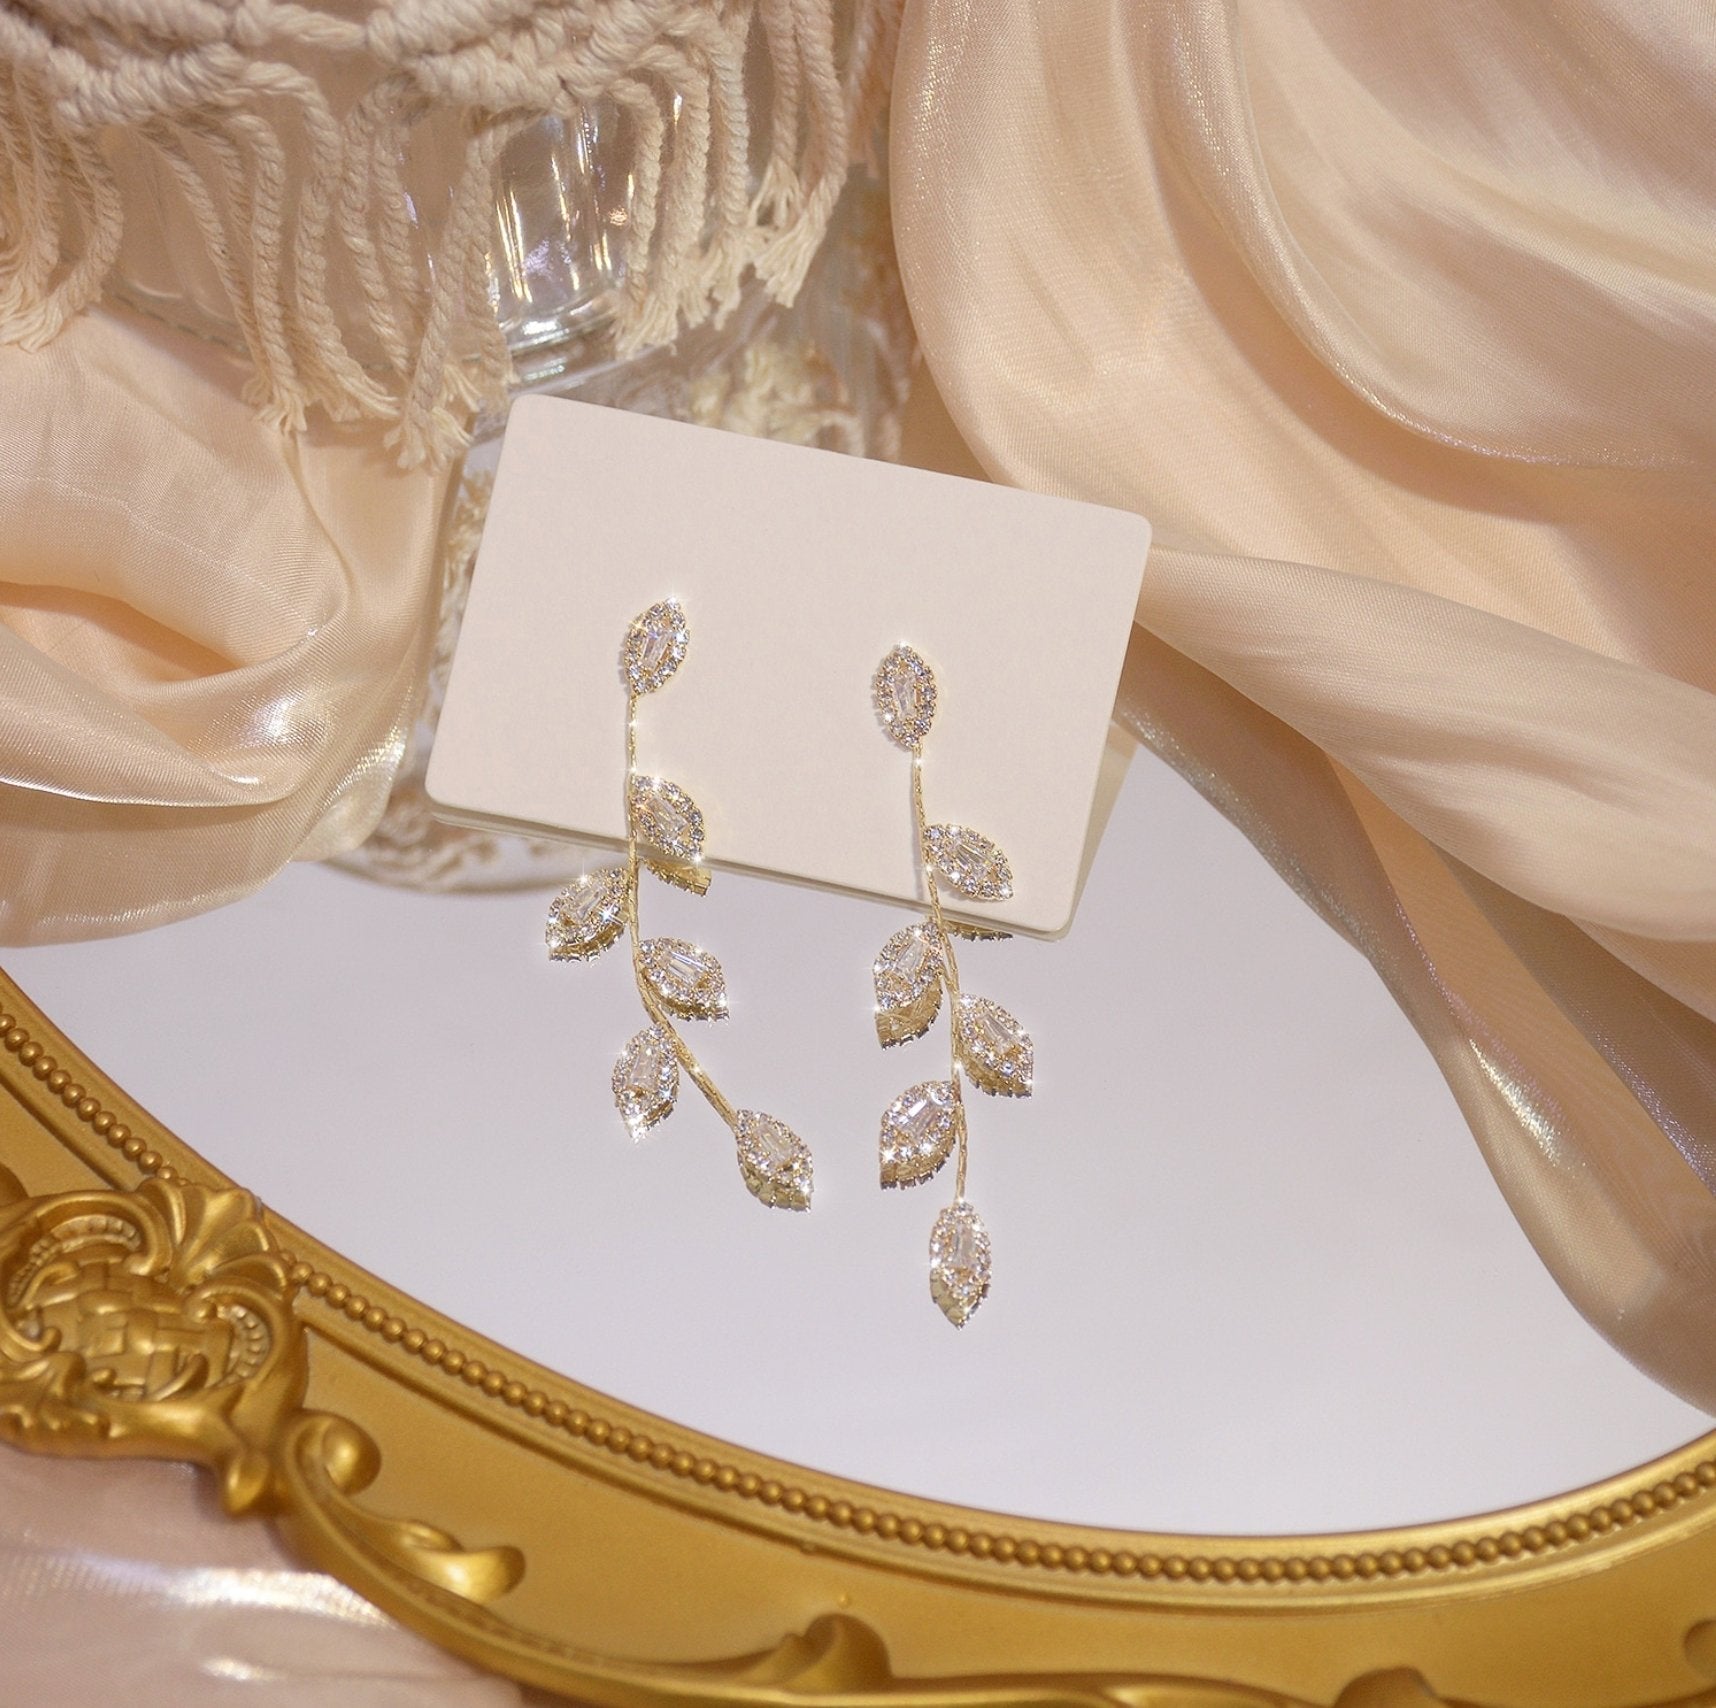 Gold Plated Crystal Vine Earrings